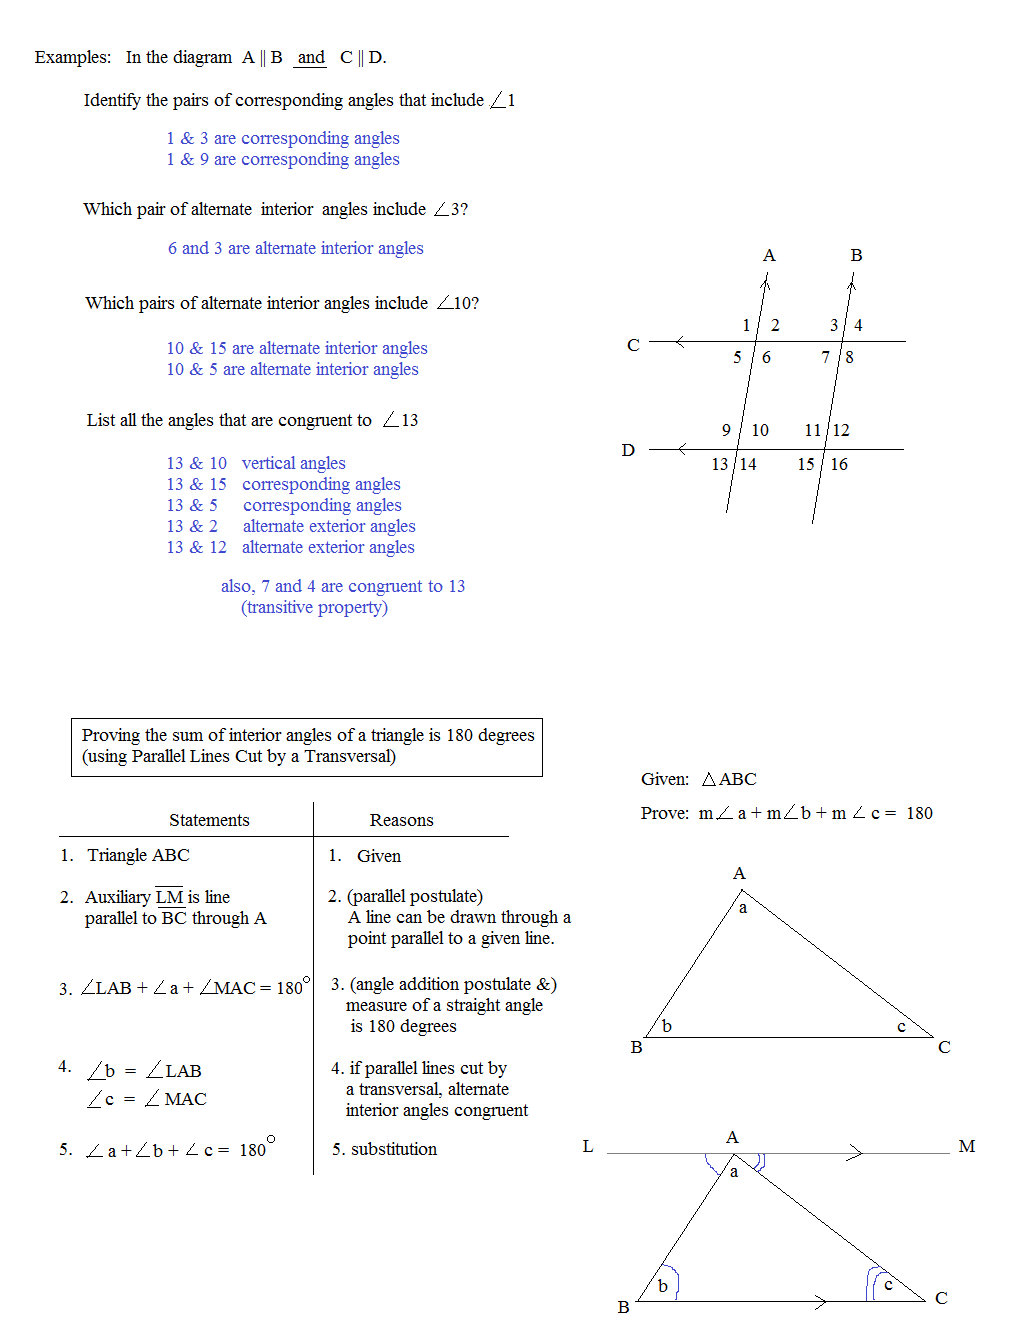 Math Plane  Parallel Lines Cuttransversals Regarding Geometry Parallel Lines Worksheet Answers